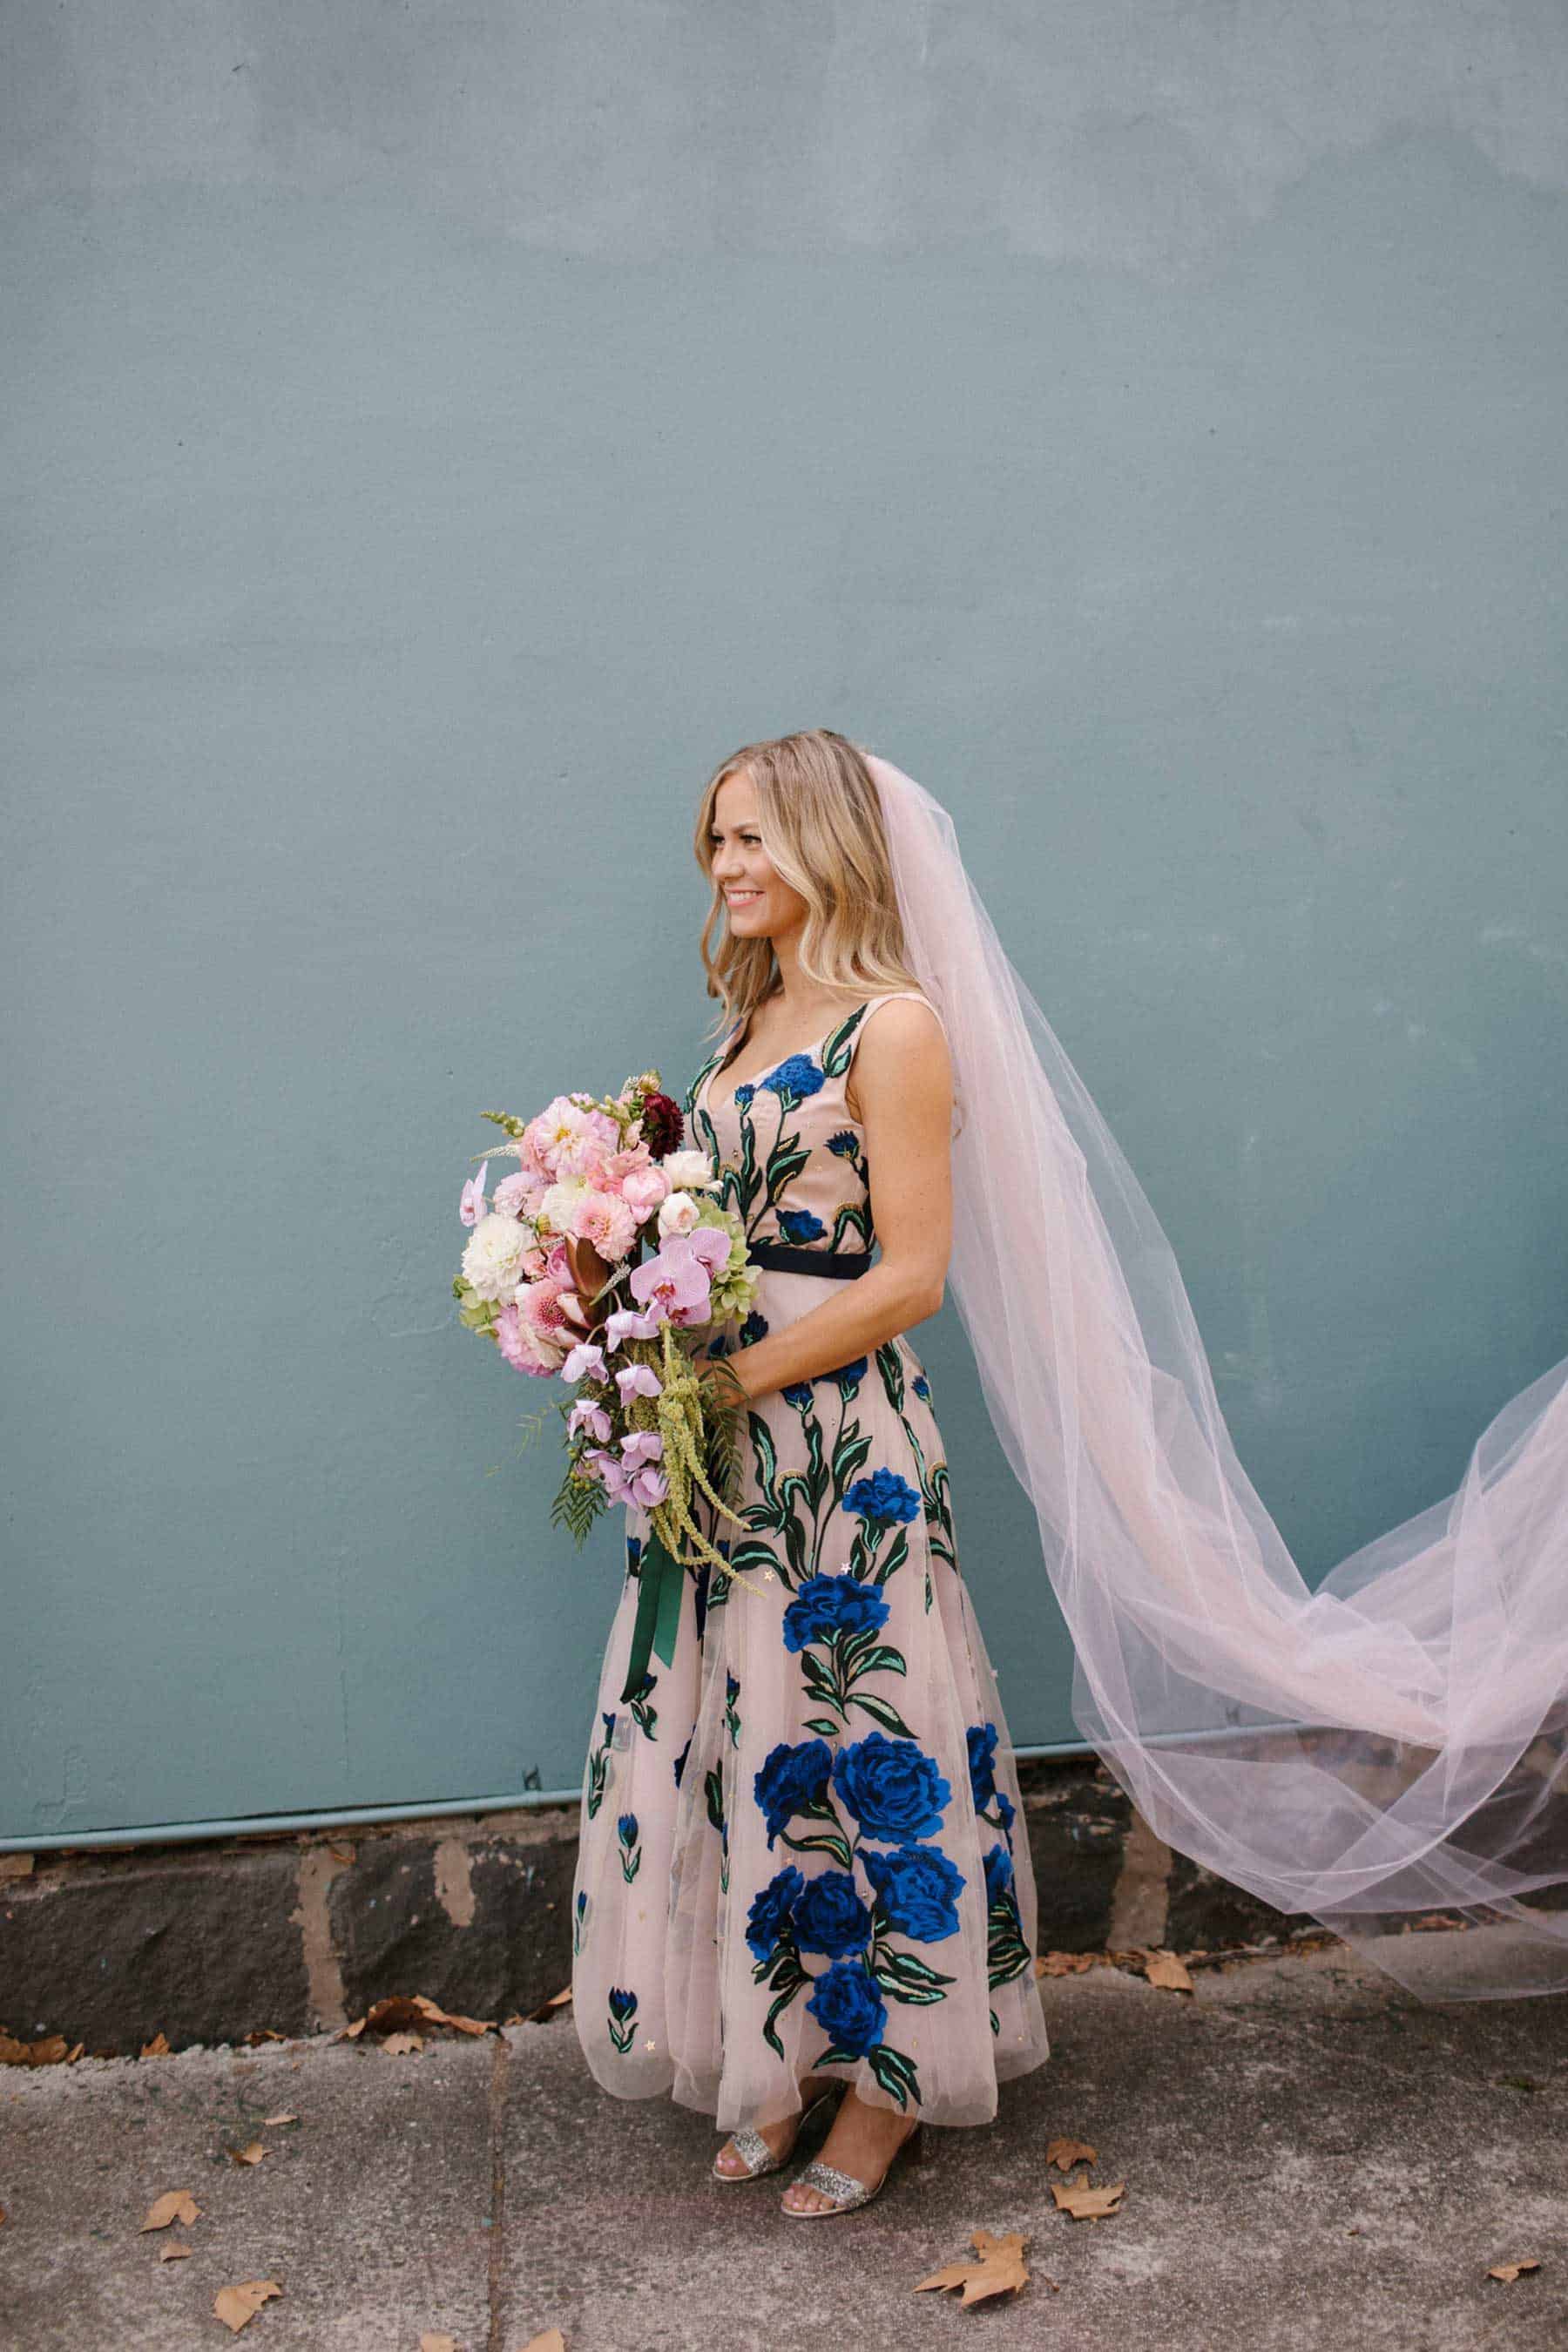 Best wedding dresses of 2019 - blush dress with blue floral applique